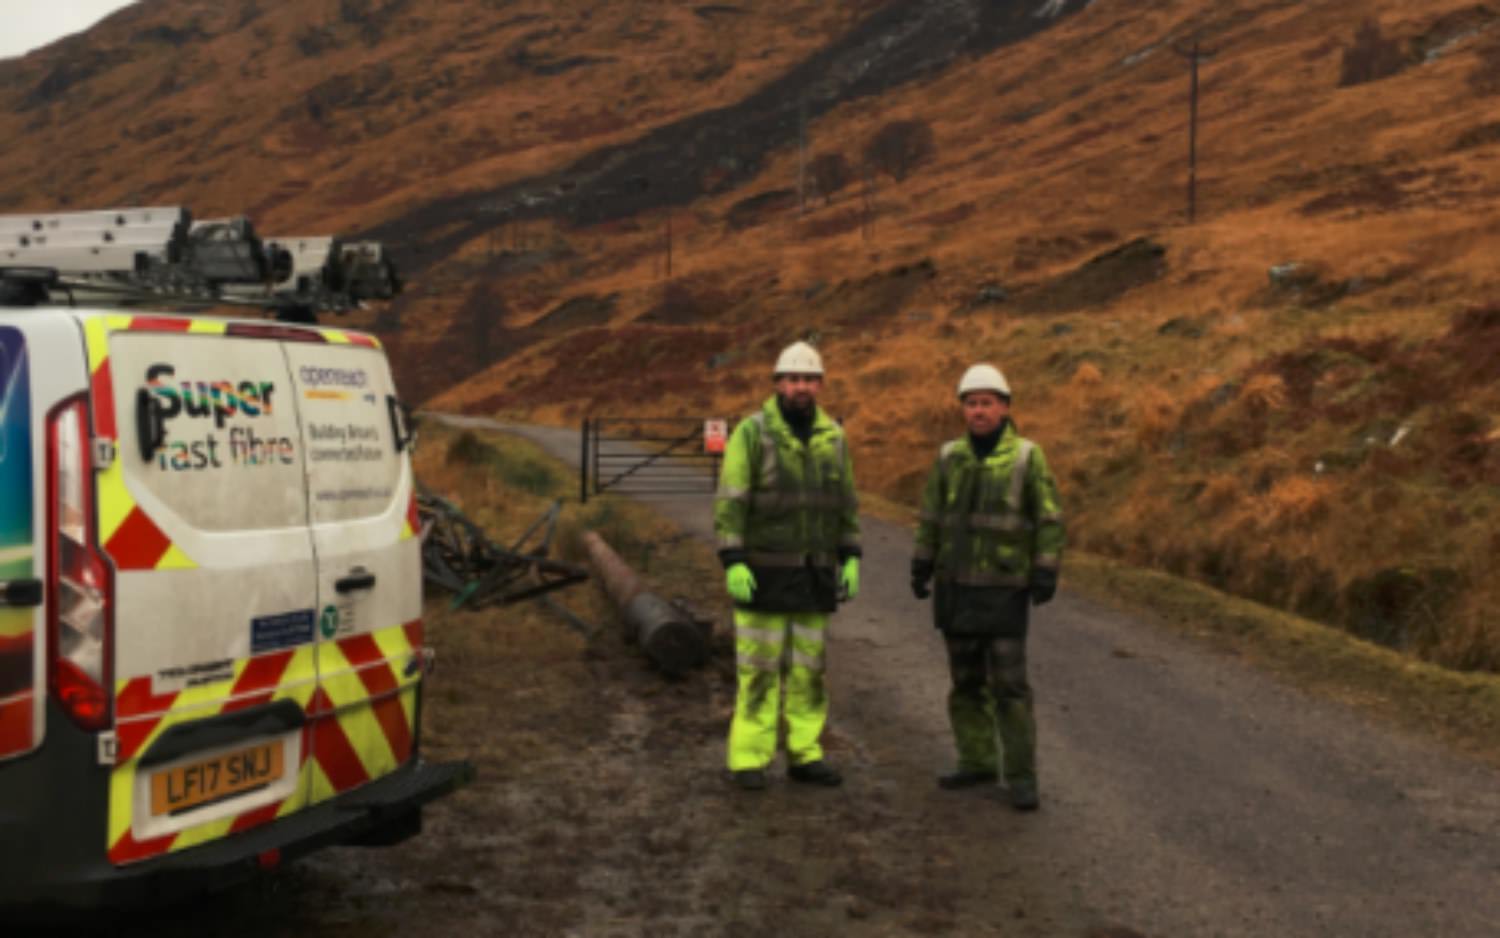 Drone used to restore communications after landslide in Scottish Highlands